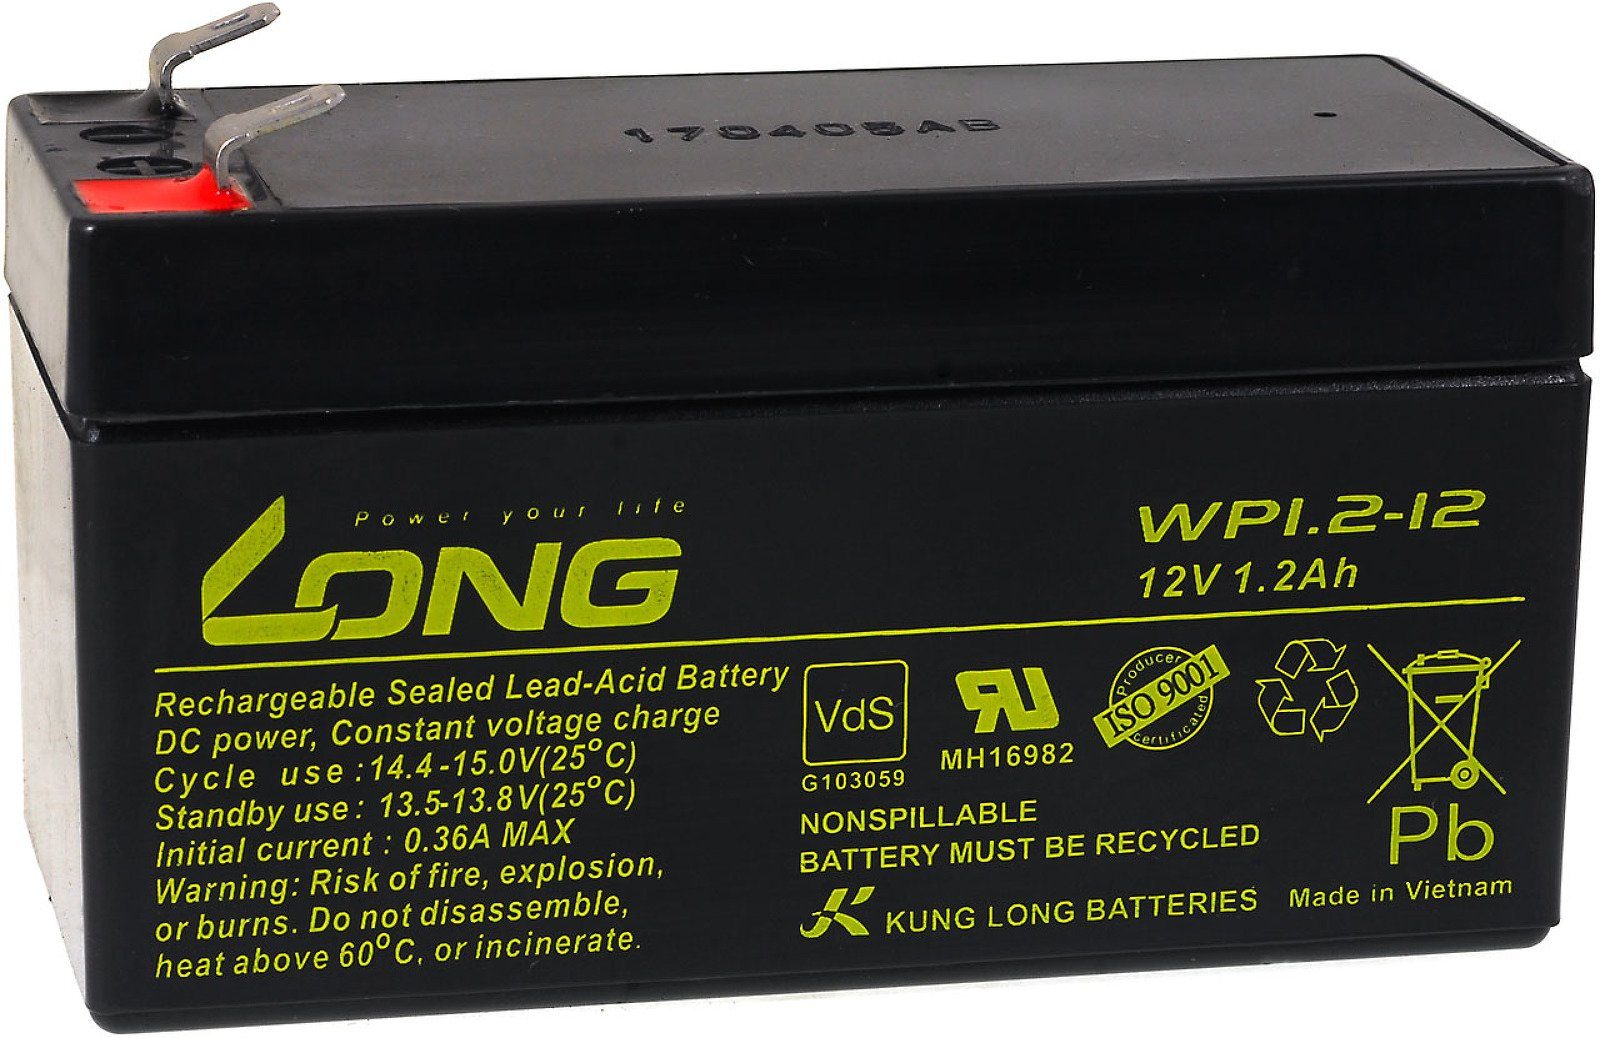 Powery Kung Long Bleiakku WP1.2-12 VdS Bleiakkus 1200 mAh (12 V)